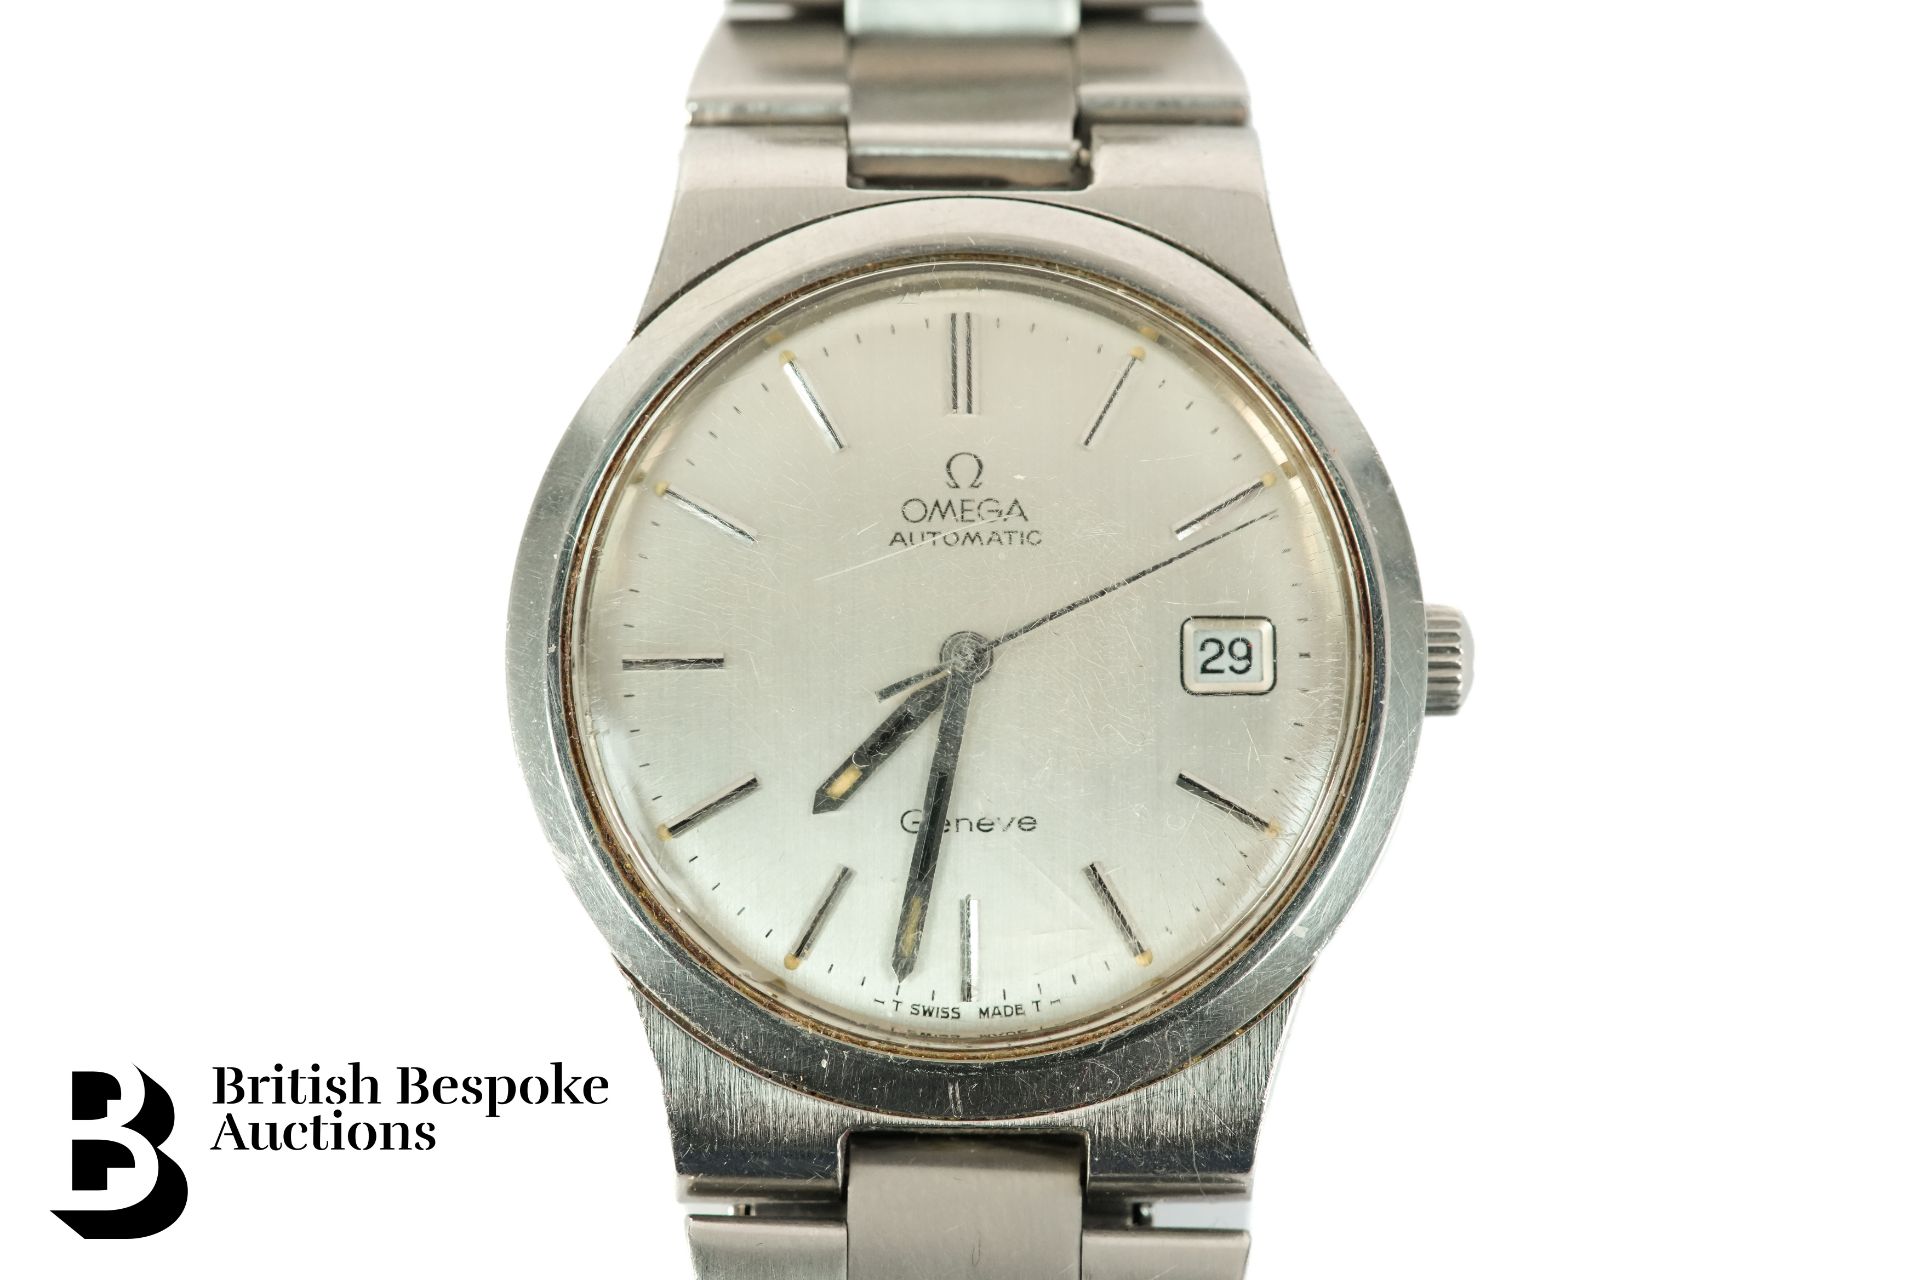 Gentleman's Omega Automatic Geneve Wrist Watch